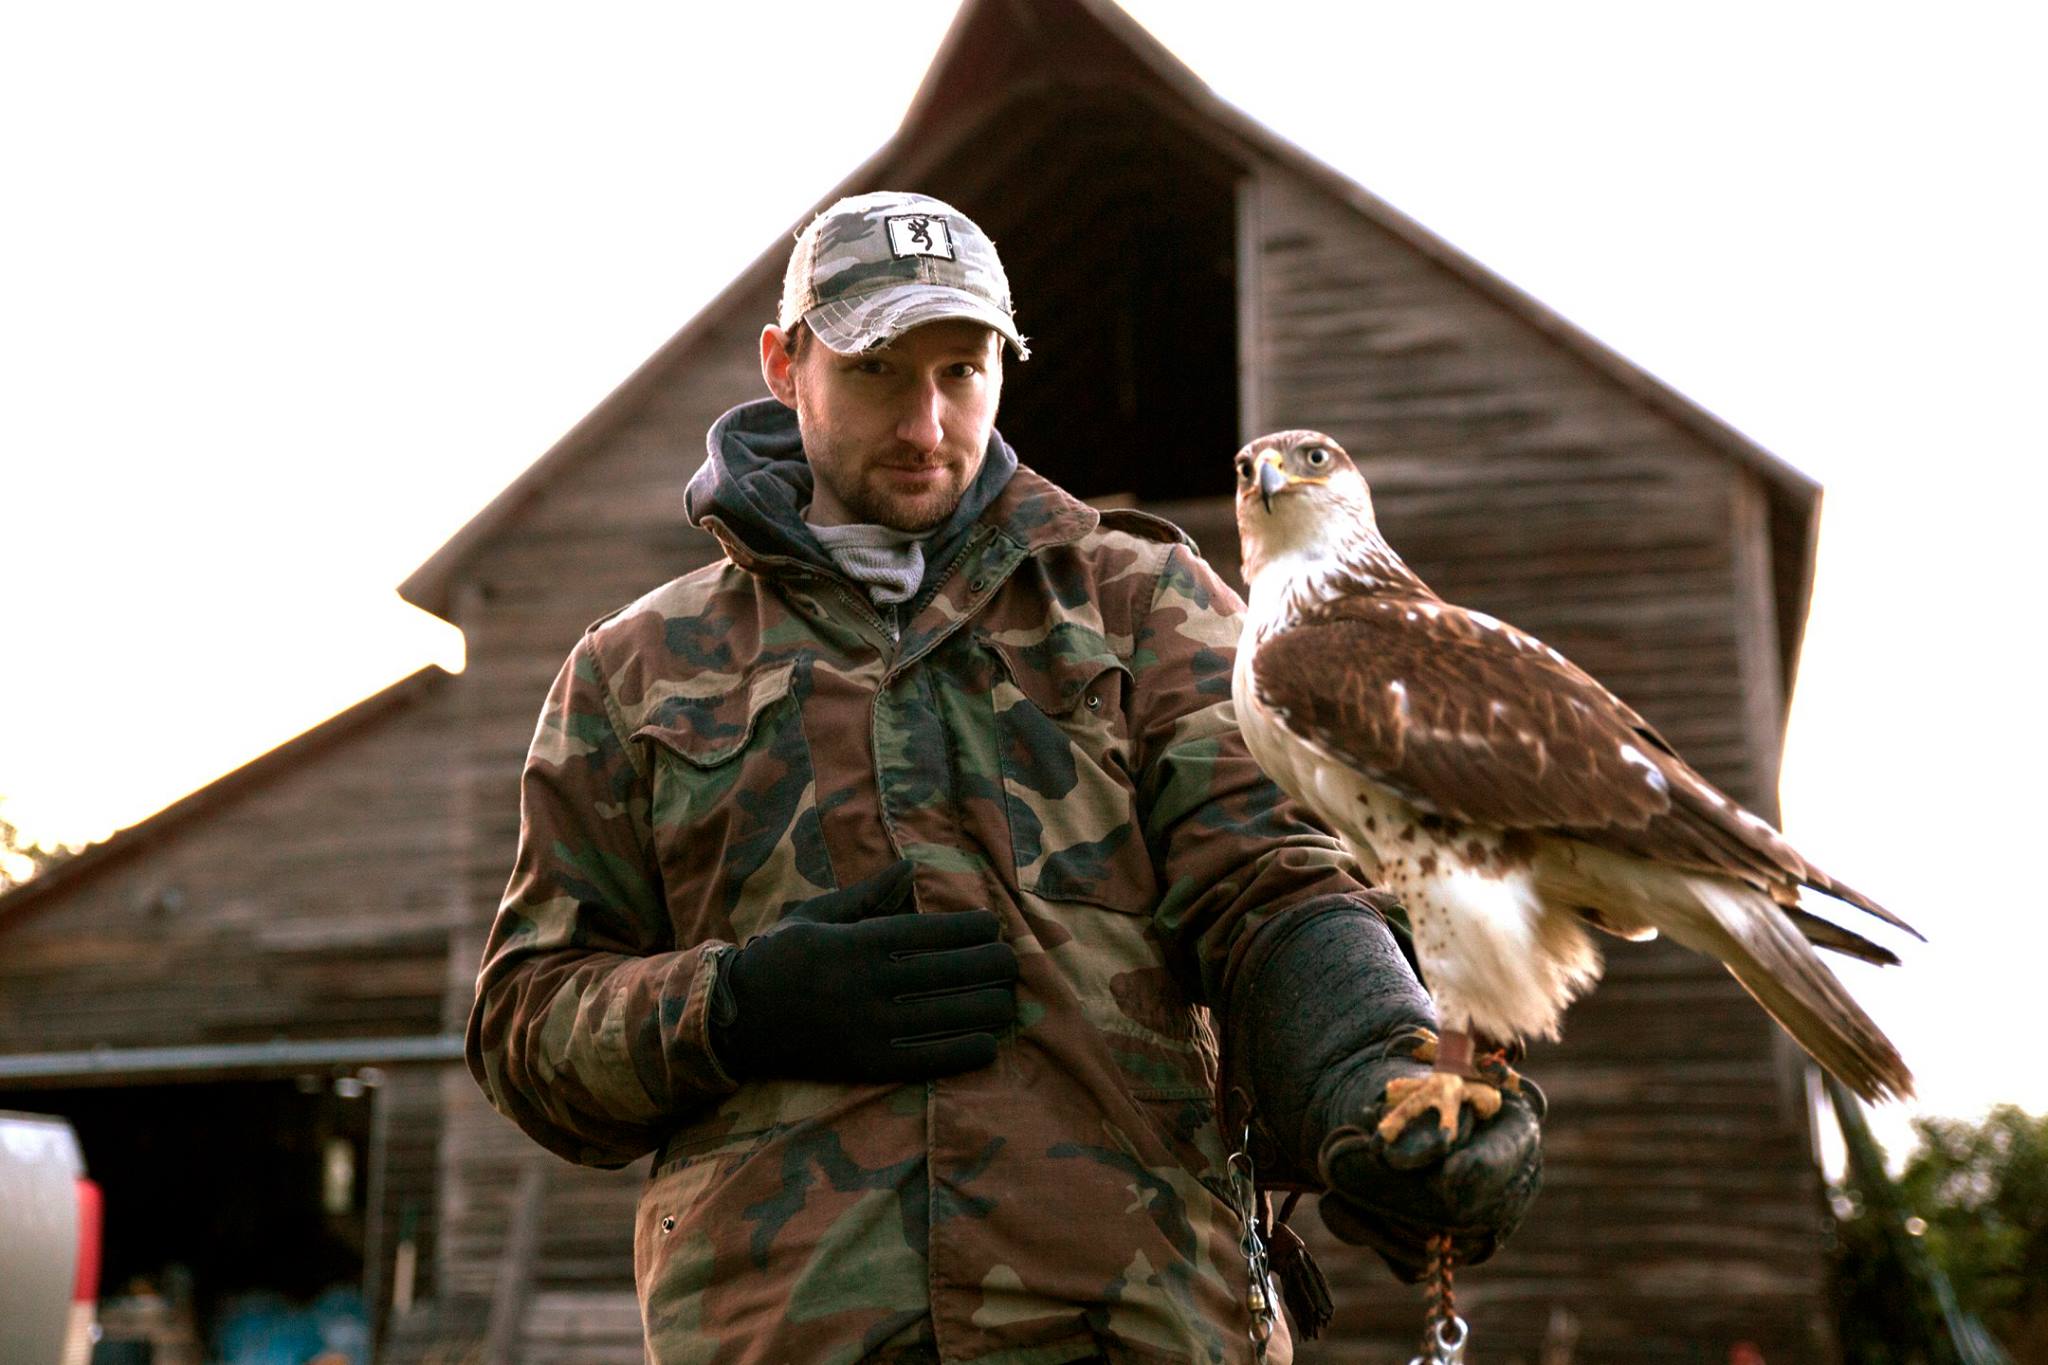 Jason L. Brown with a Falcon 